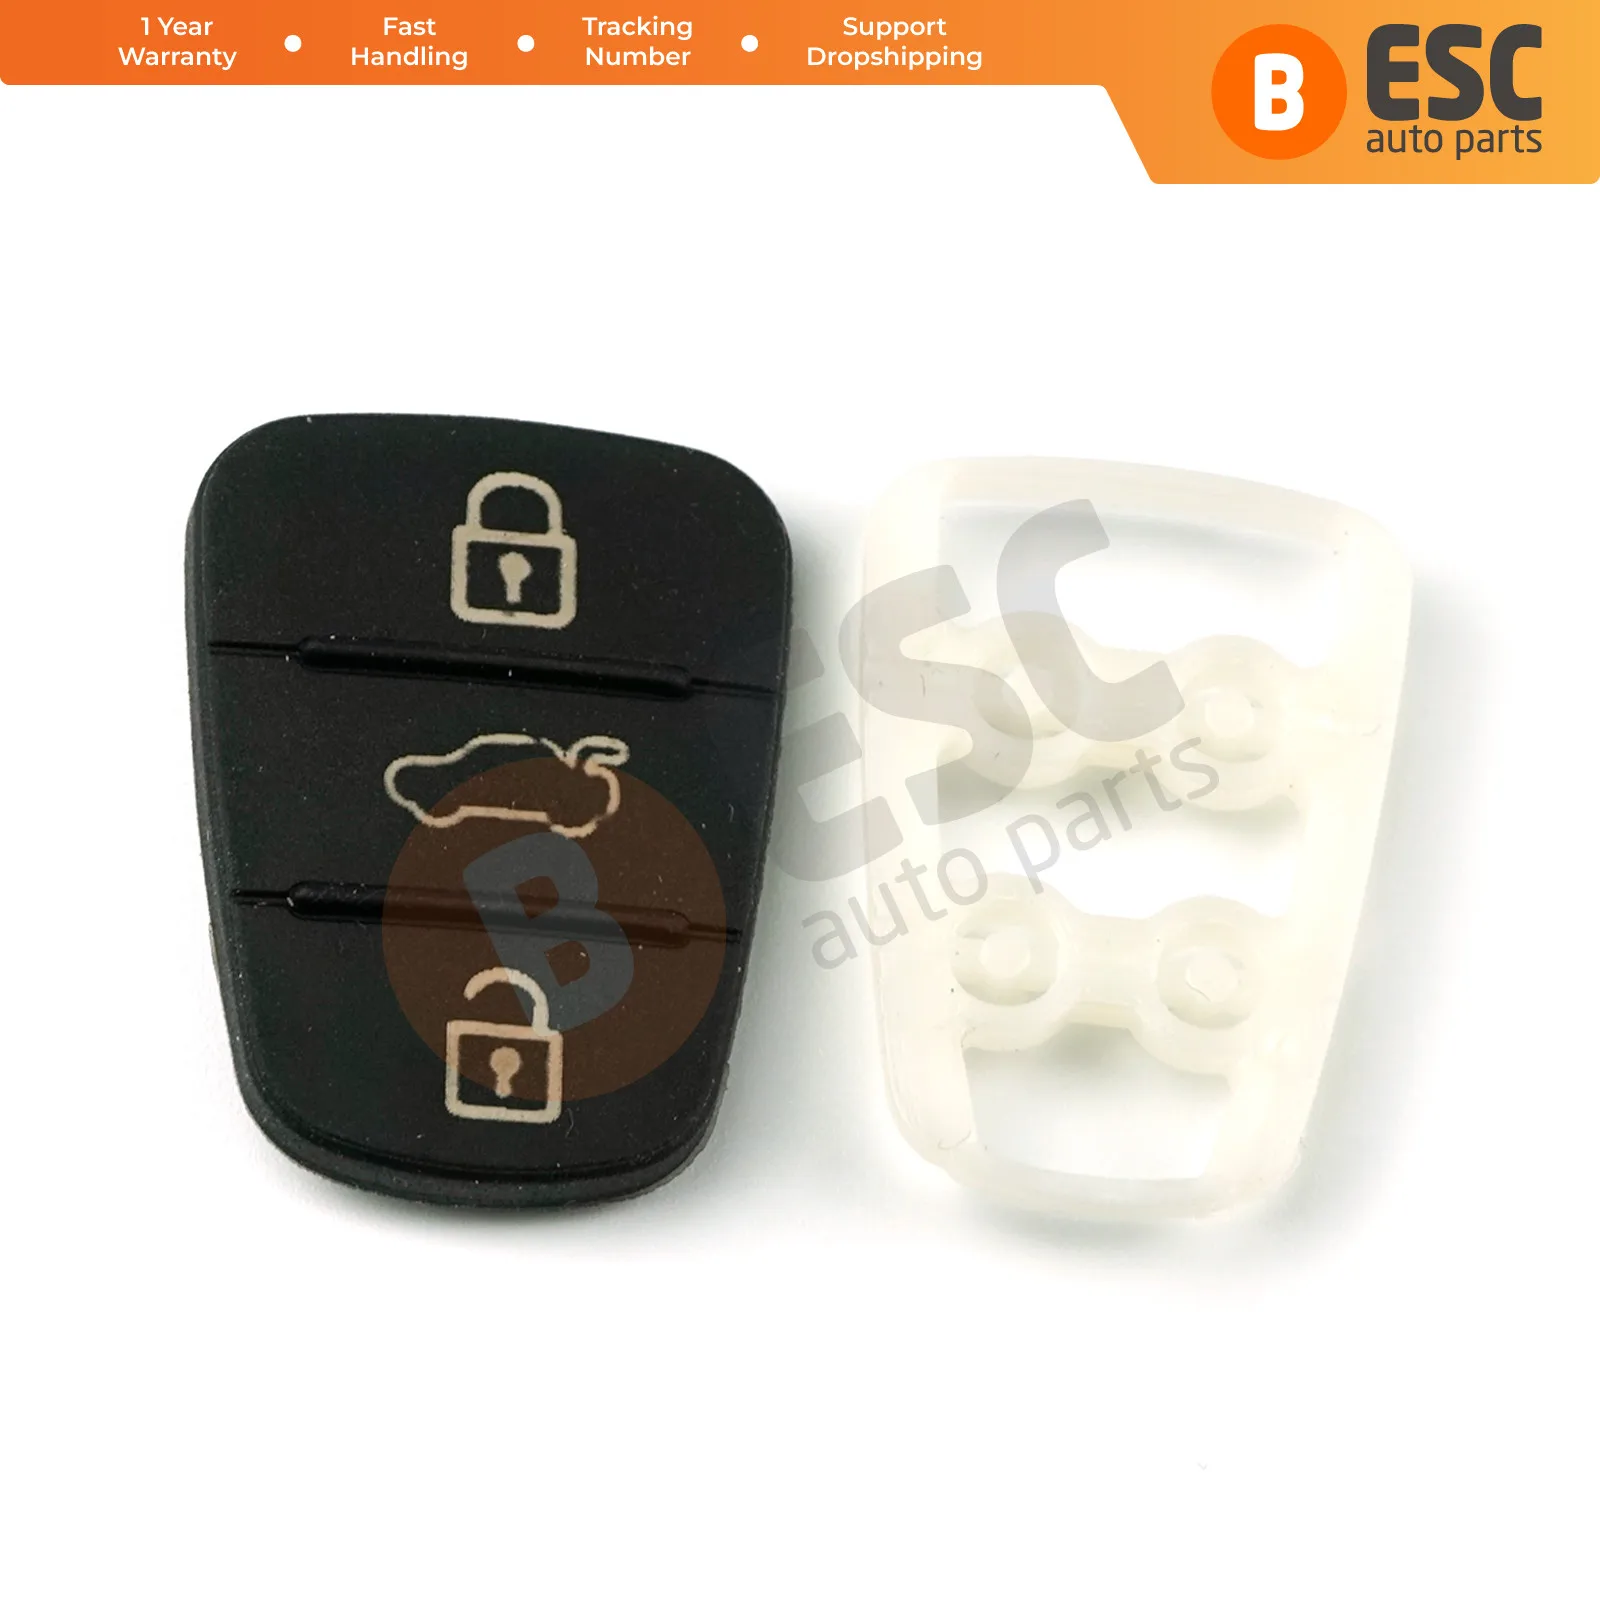 

EDP1120 Flip Remote Car Key Button Soft Touch Black Silicone Rubber Pad for Hyundai IX35 I10 I20 I30 Kia Rio Ceed K2 K5 Sportage